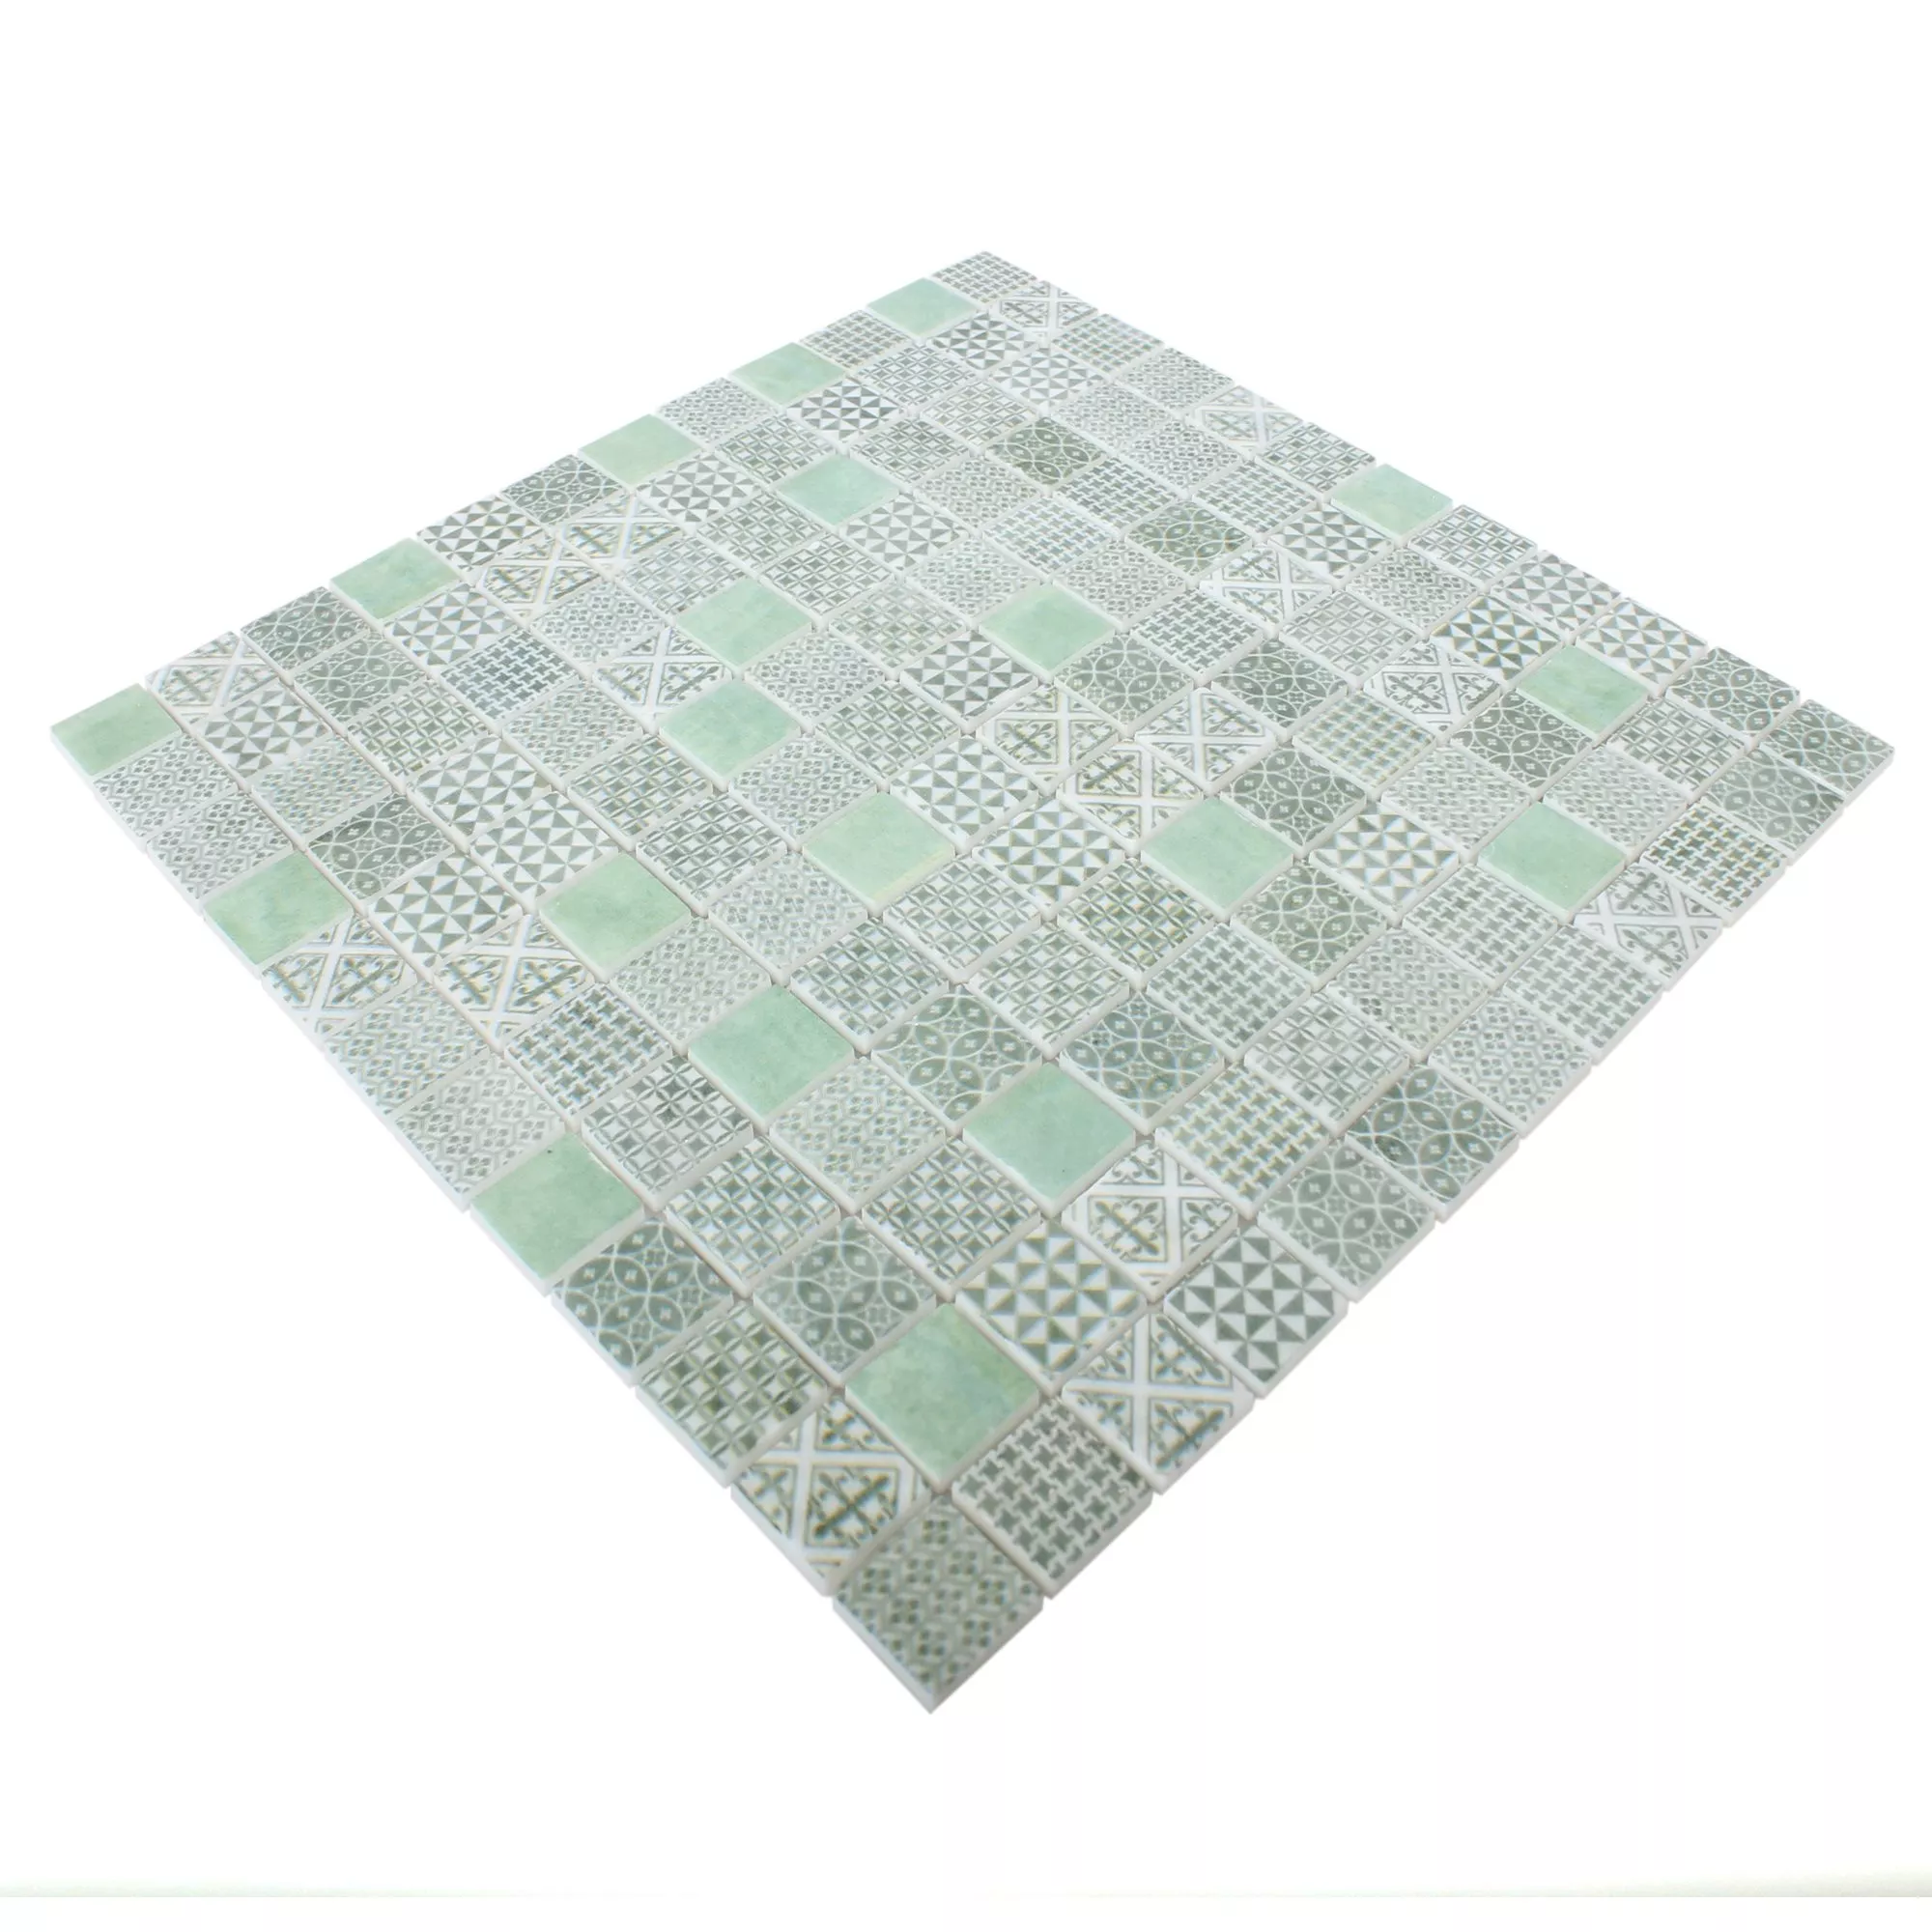 Sample Glass Mosaic Tiles Malard Green